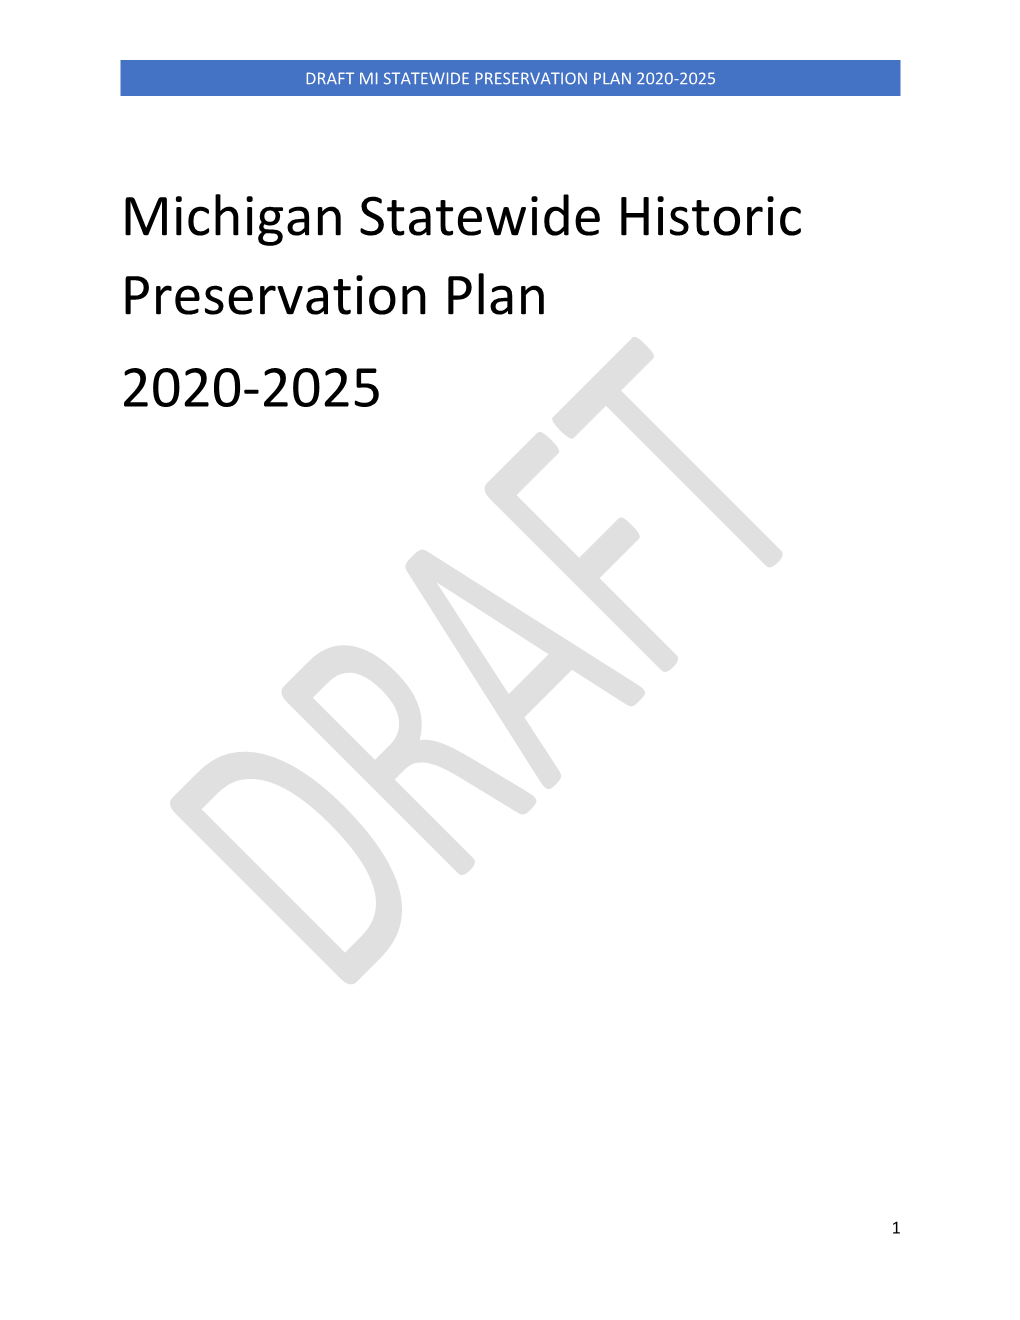 Michigan Statewide Historic Preservation Plan 2020-2025